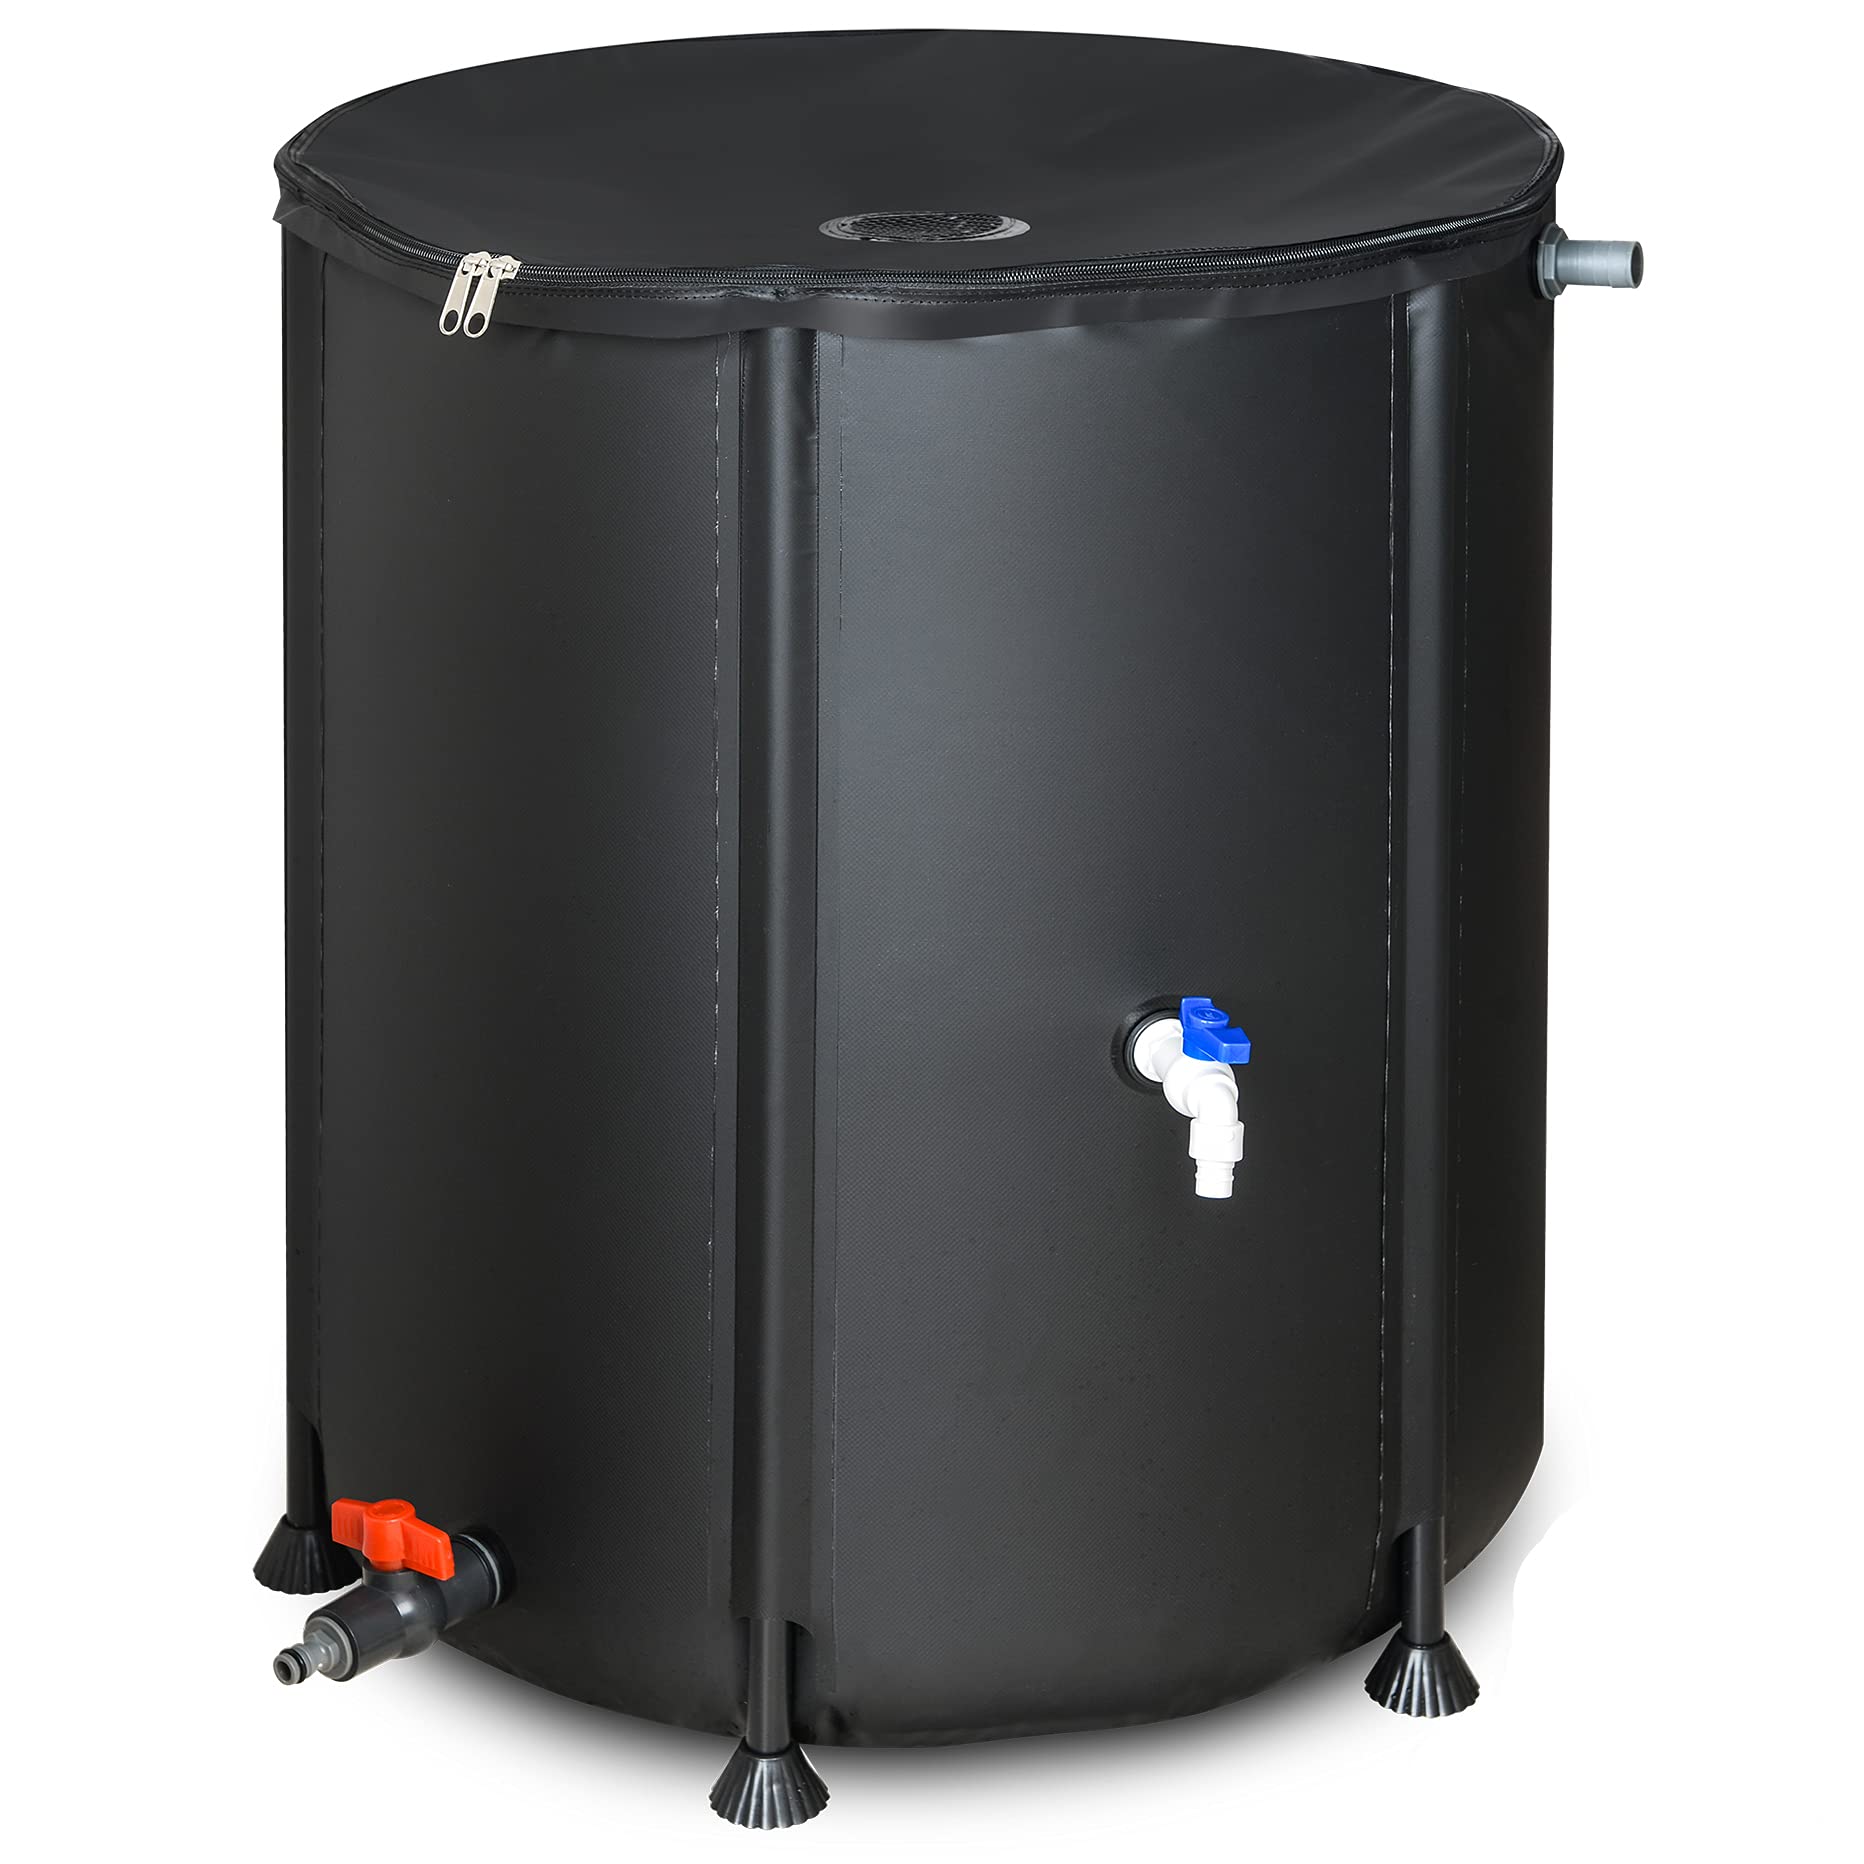 LOSTRONAUT 53 Gallon Portable Rain Barrel Water Tank